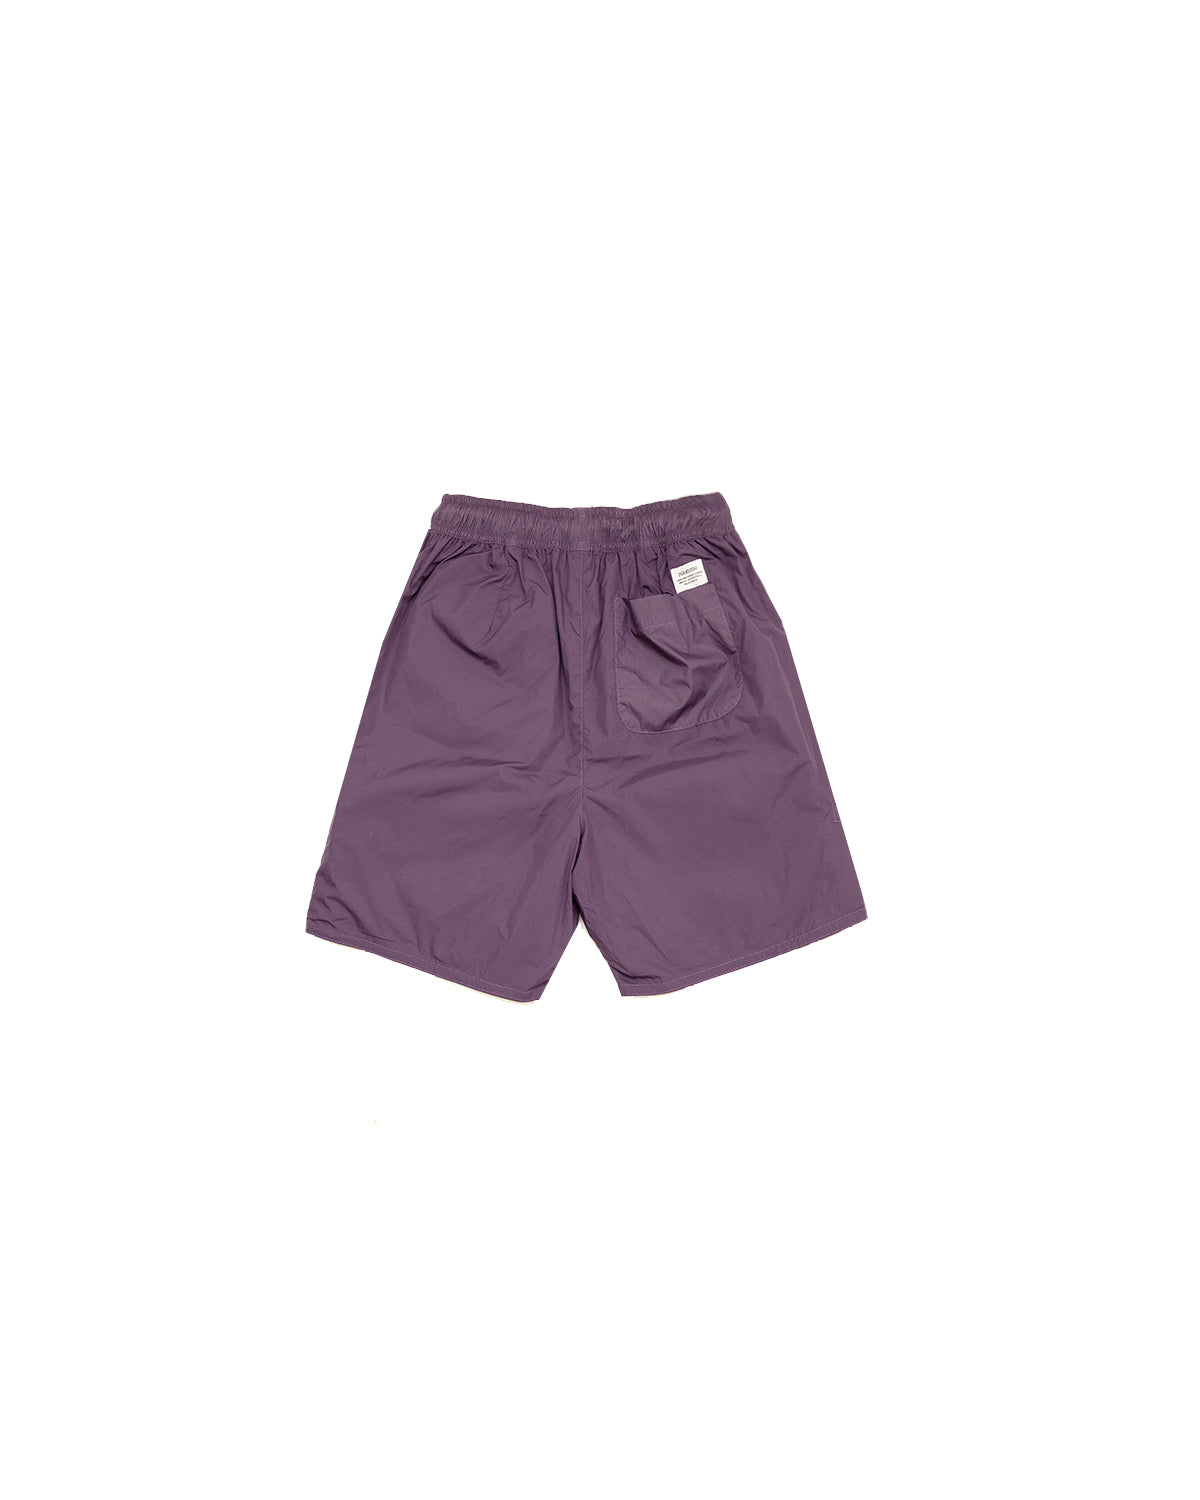 Reversible Pareja Shorts - Clover Green/Grape